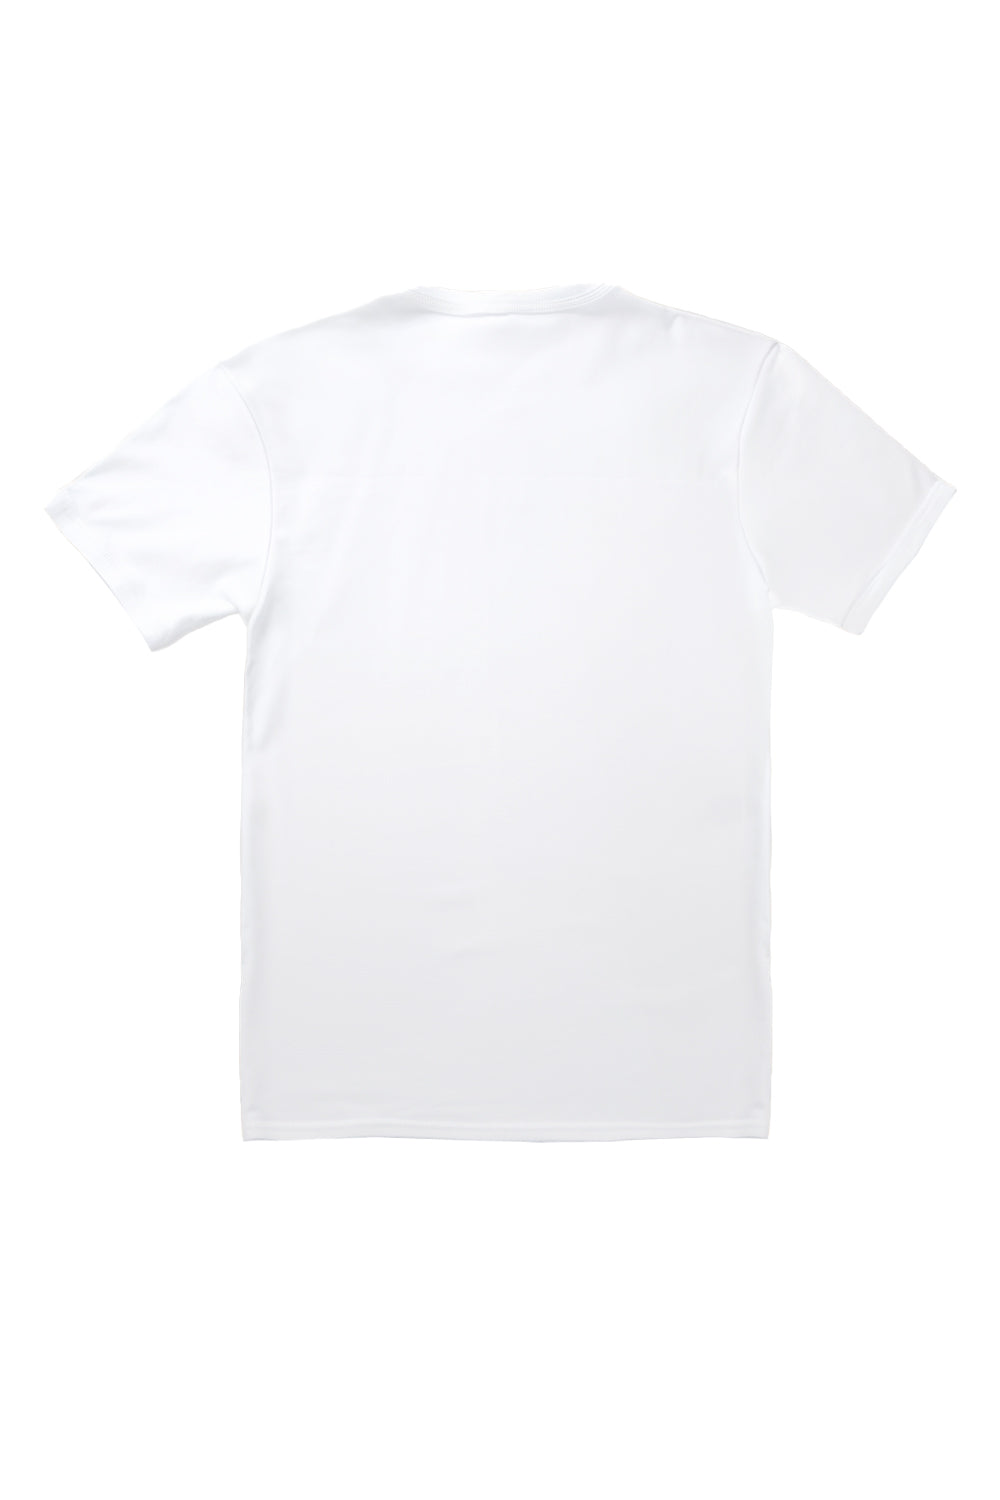 Stay Western T-Shirt in White (Custom Packs)